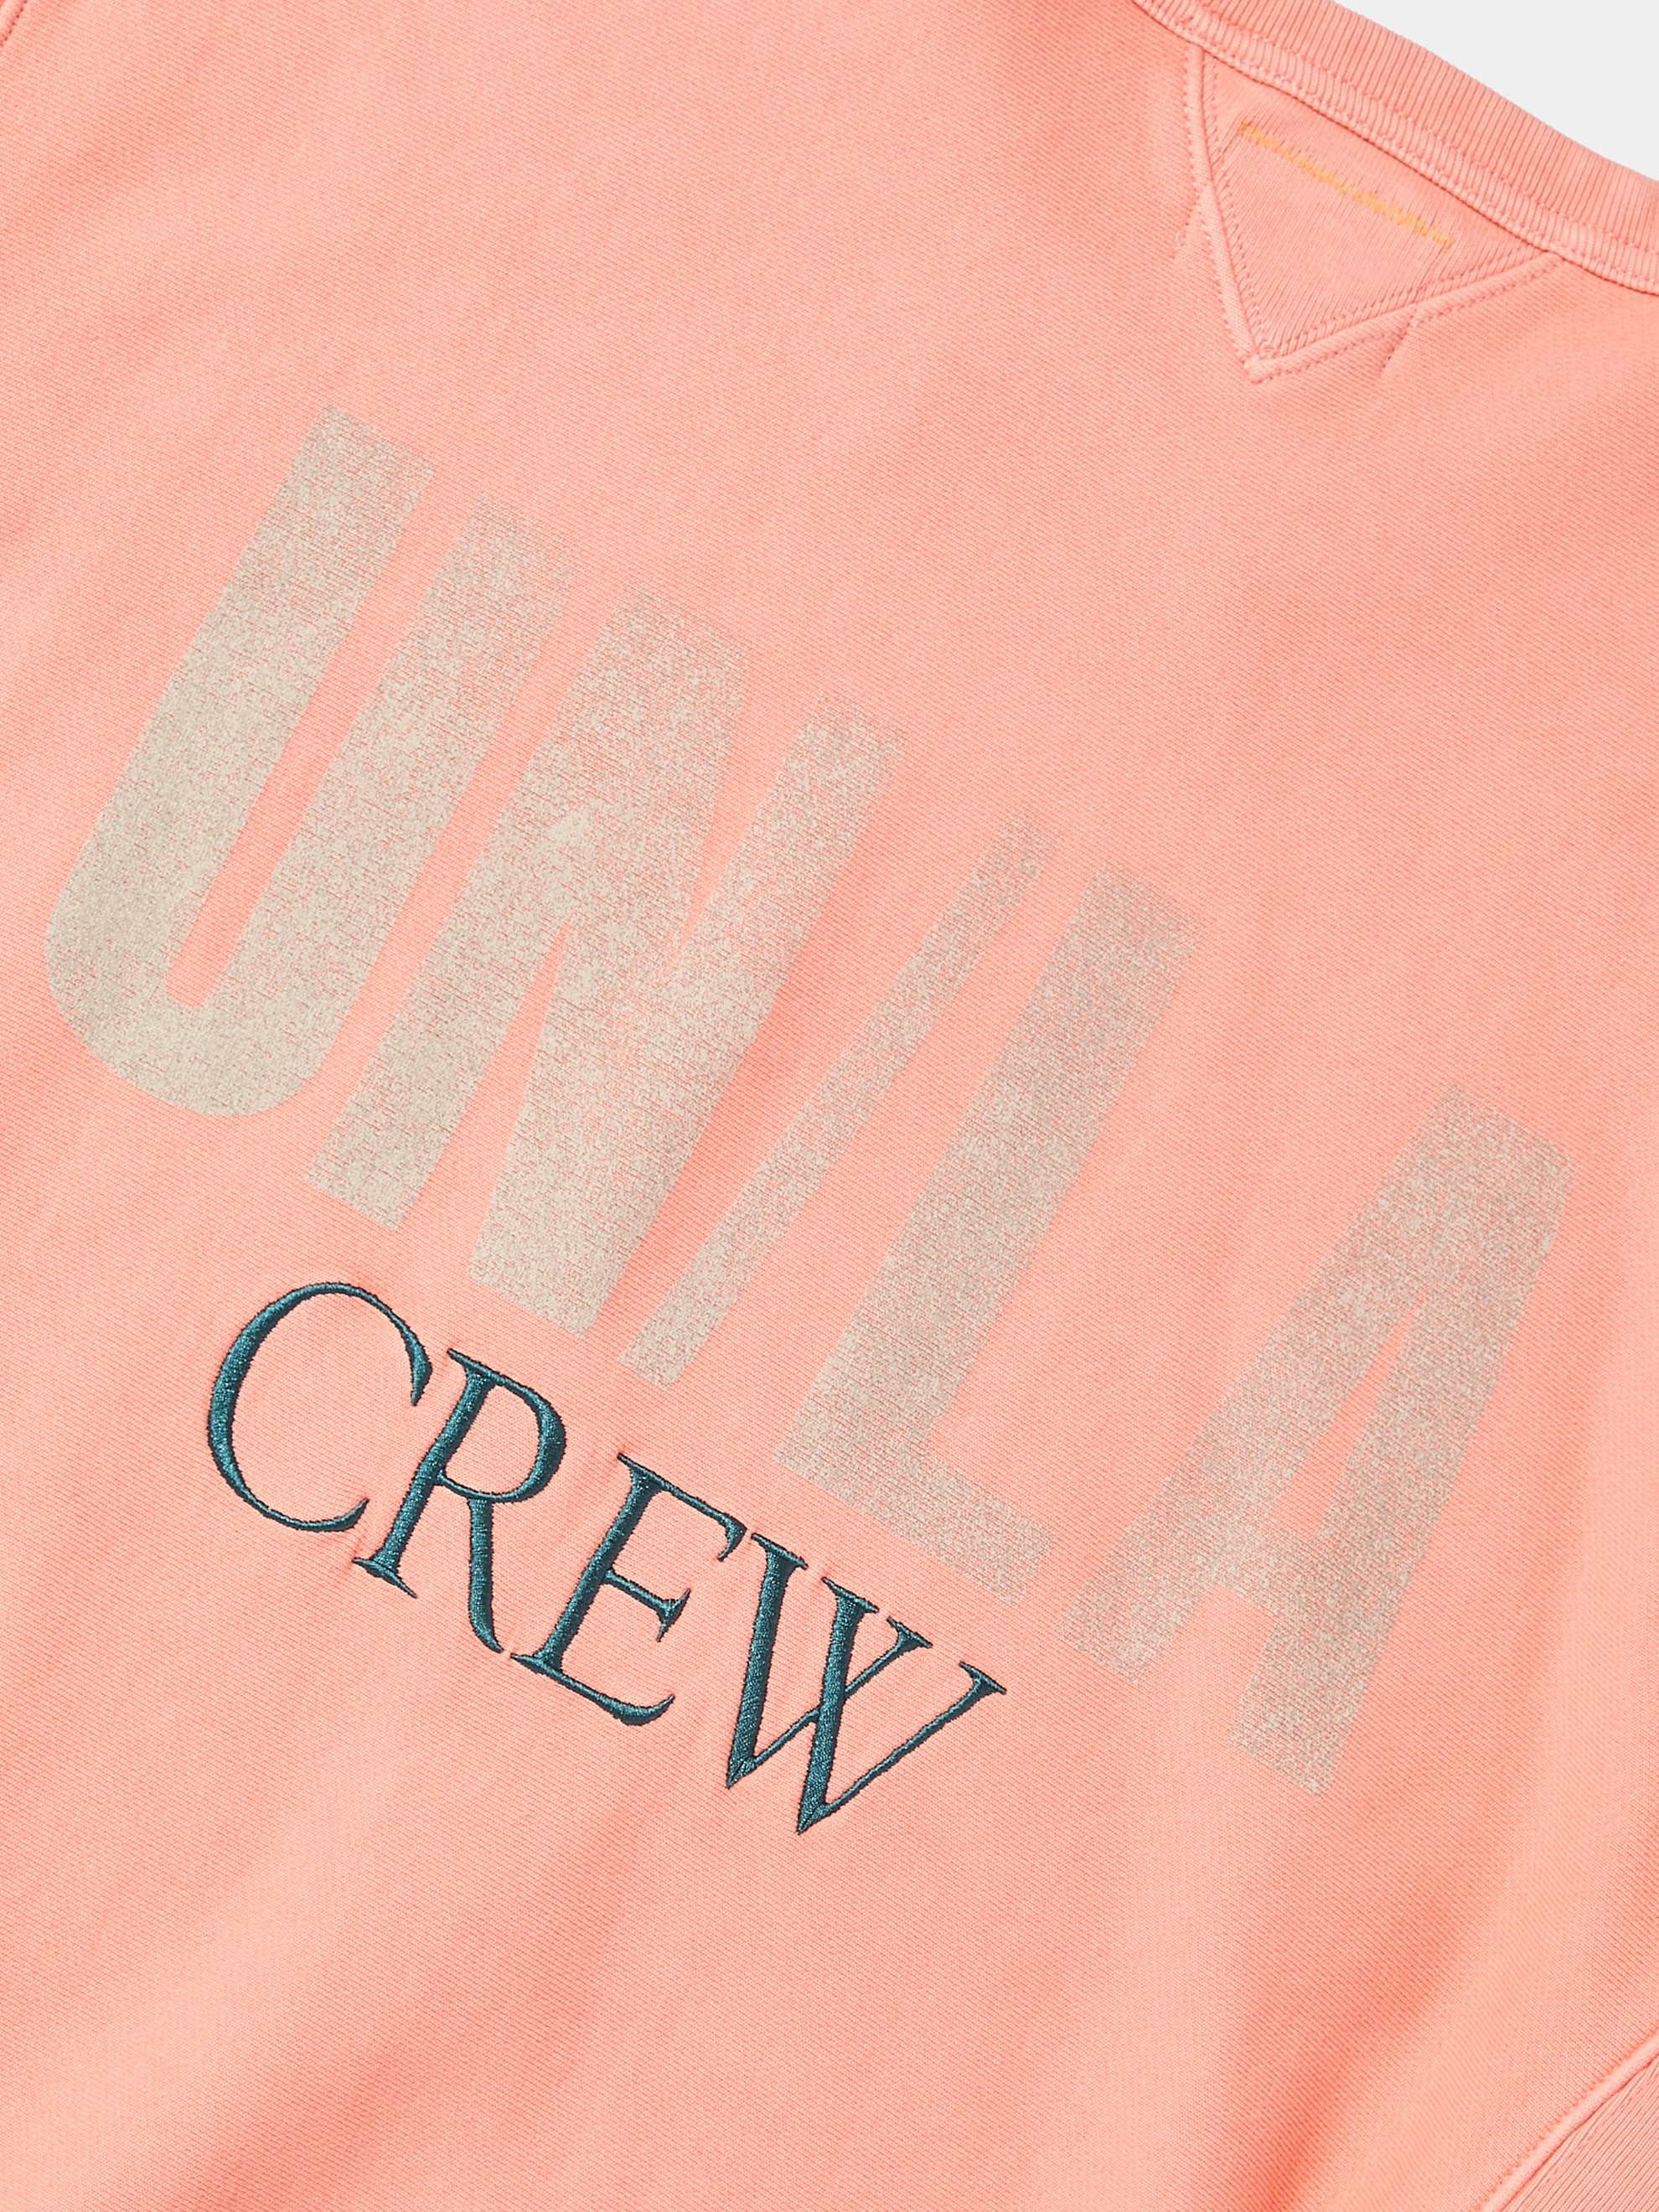 Union x J.Crew 14oz Crewneck (Bright Pink)